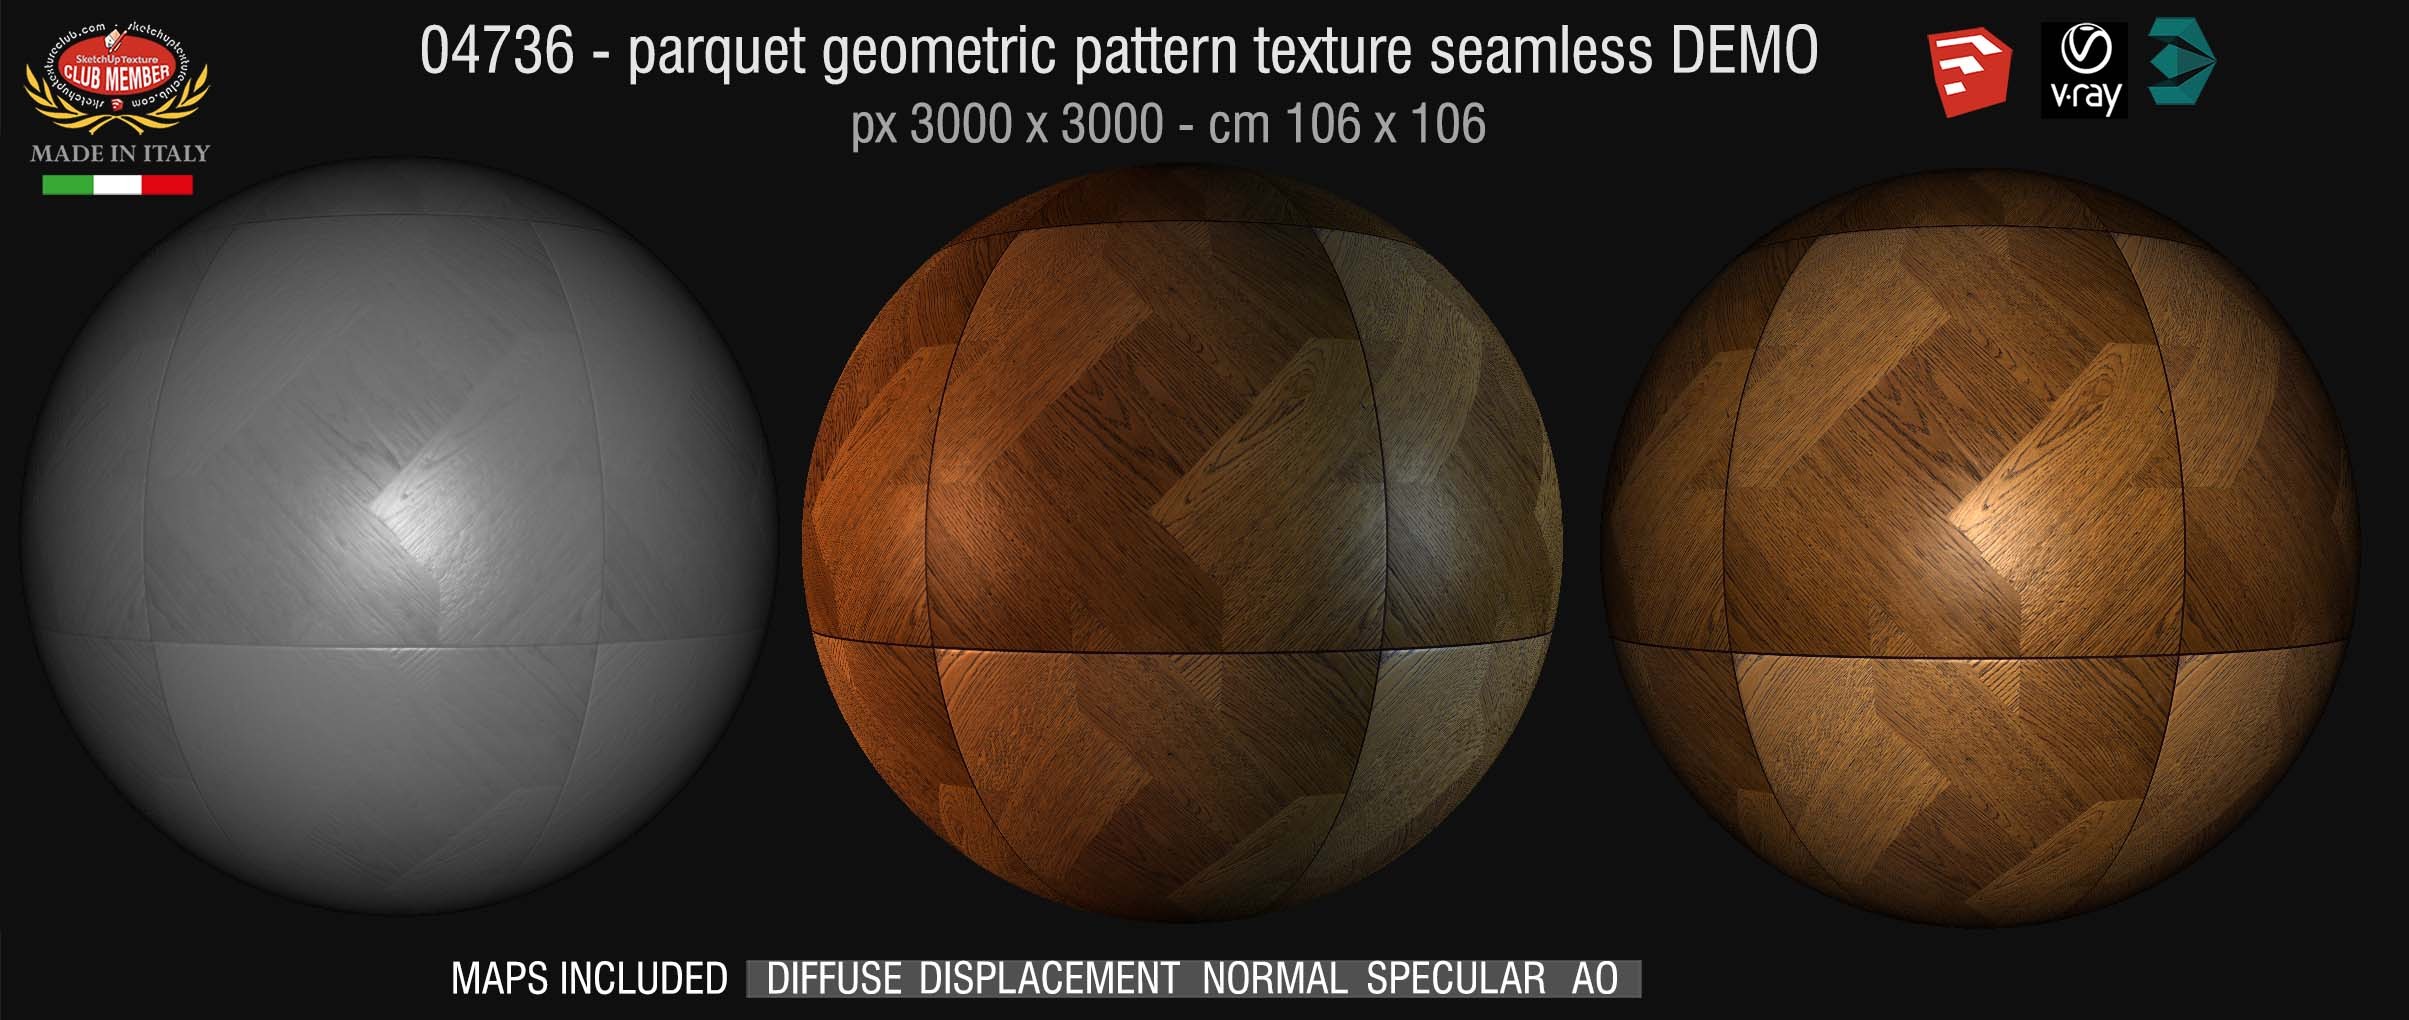 04736 HR Parquet geometric pattern texture seamless + maps DEMO